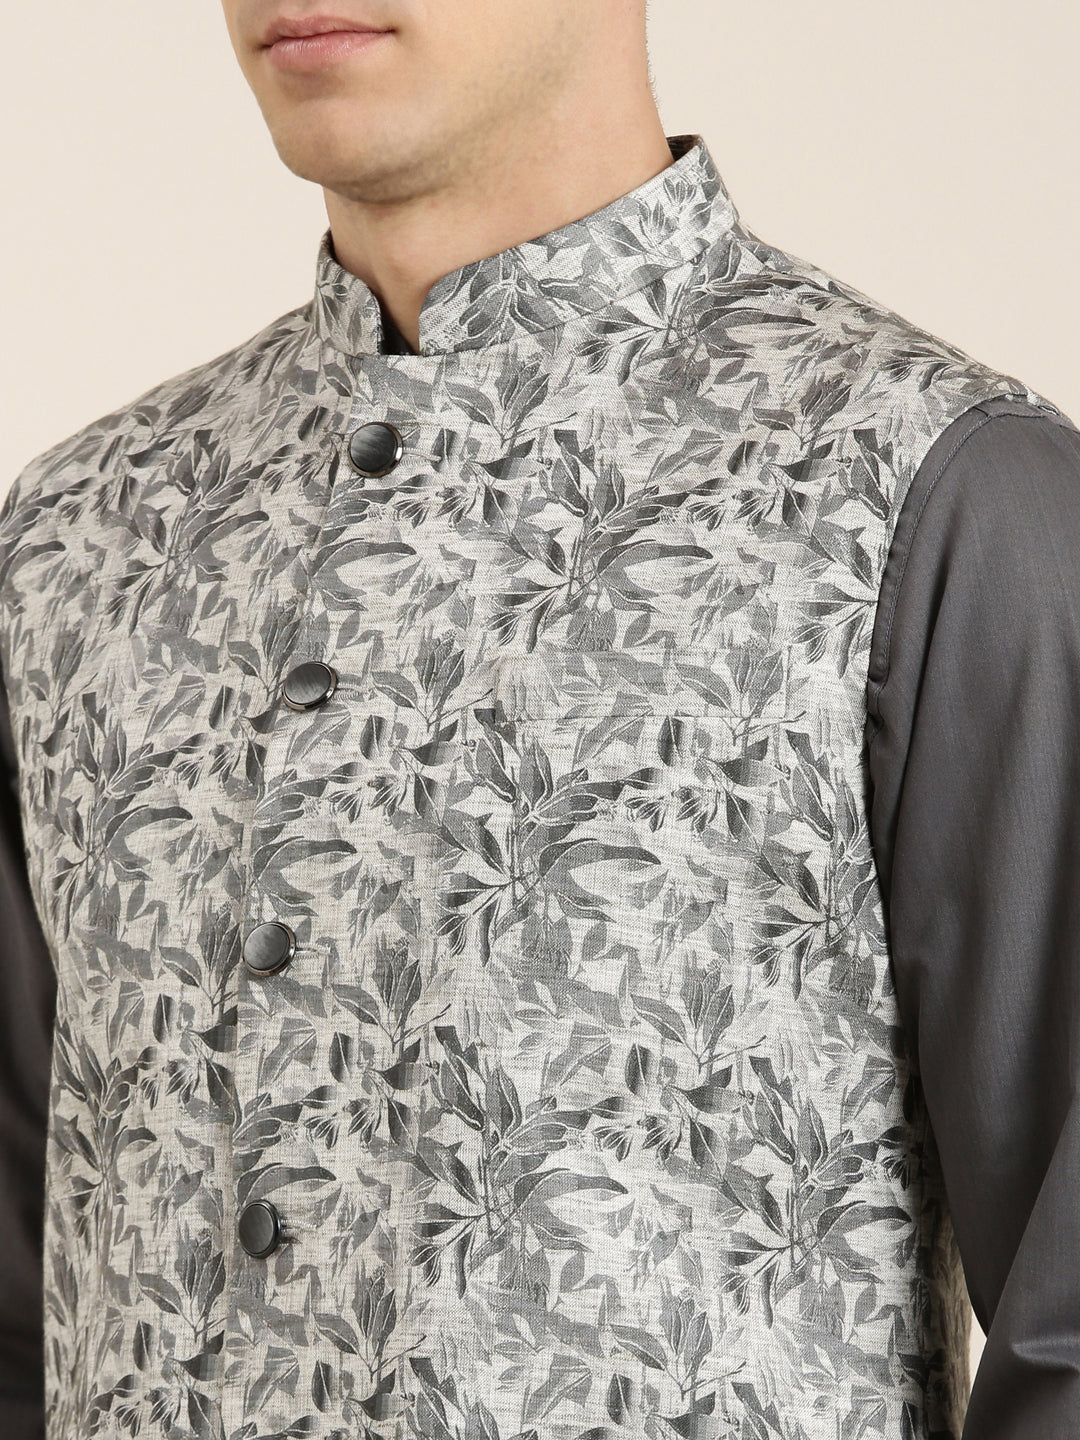 Grey Linen Printed Jacket Kurta Set